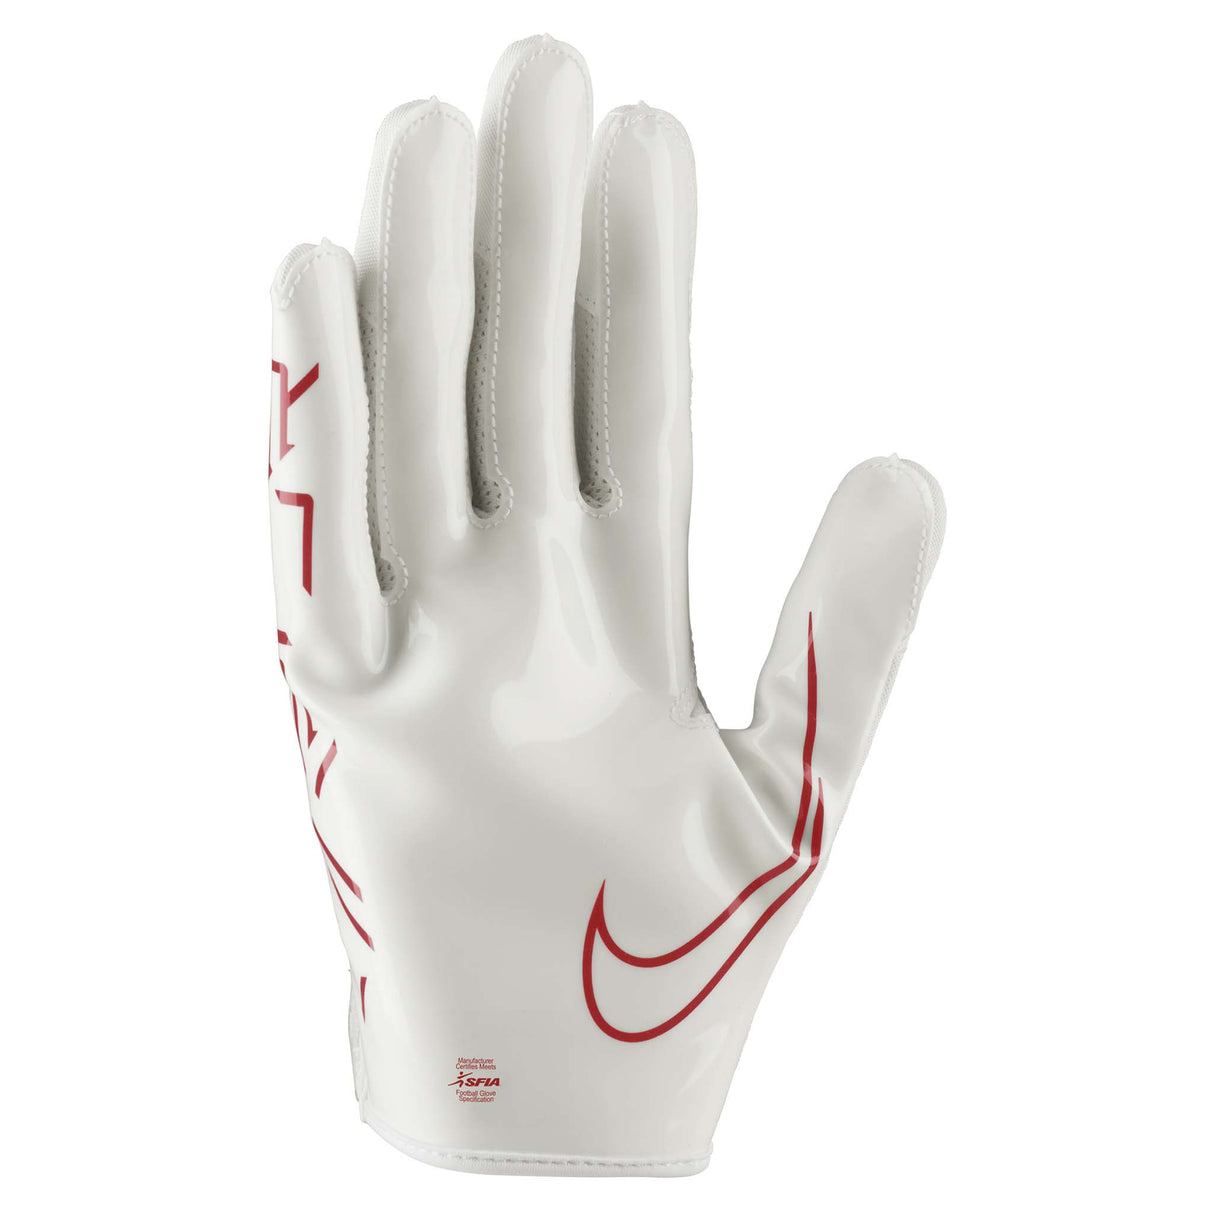 Nike Vapor Jet 7.0 FG gants de football américain pour adultes white white university red paume